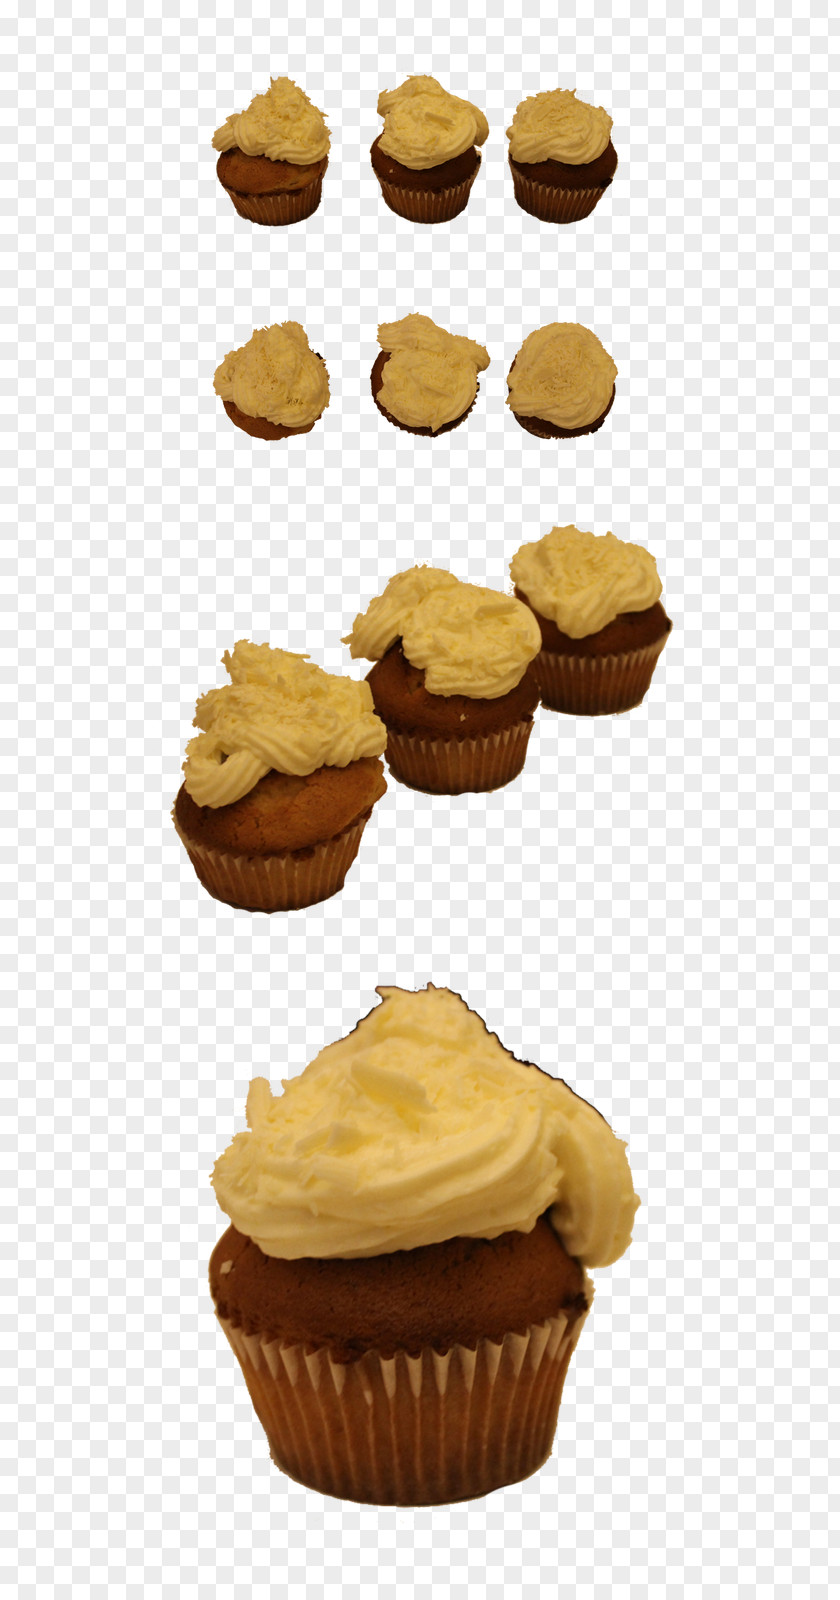 Vanilla Cupcake Peanut Butter Cup Muffin Buttercream Flavor PNG